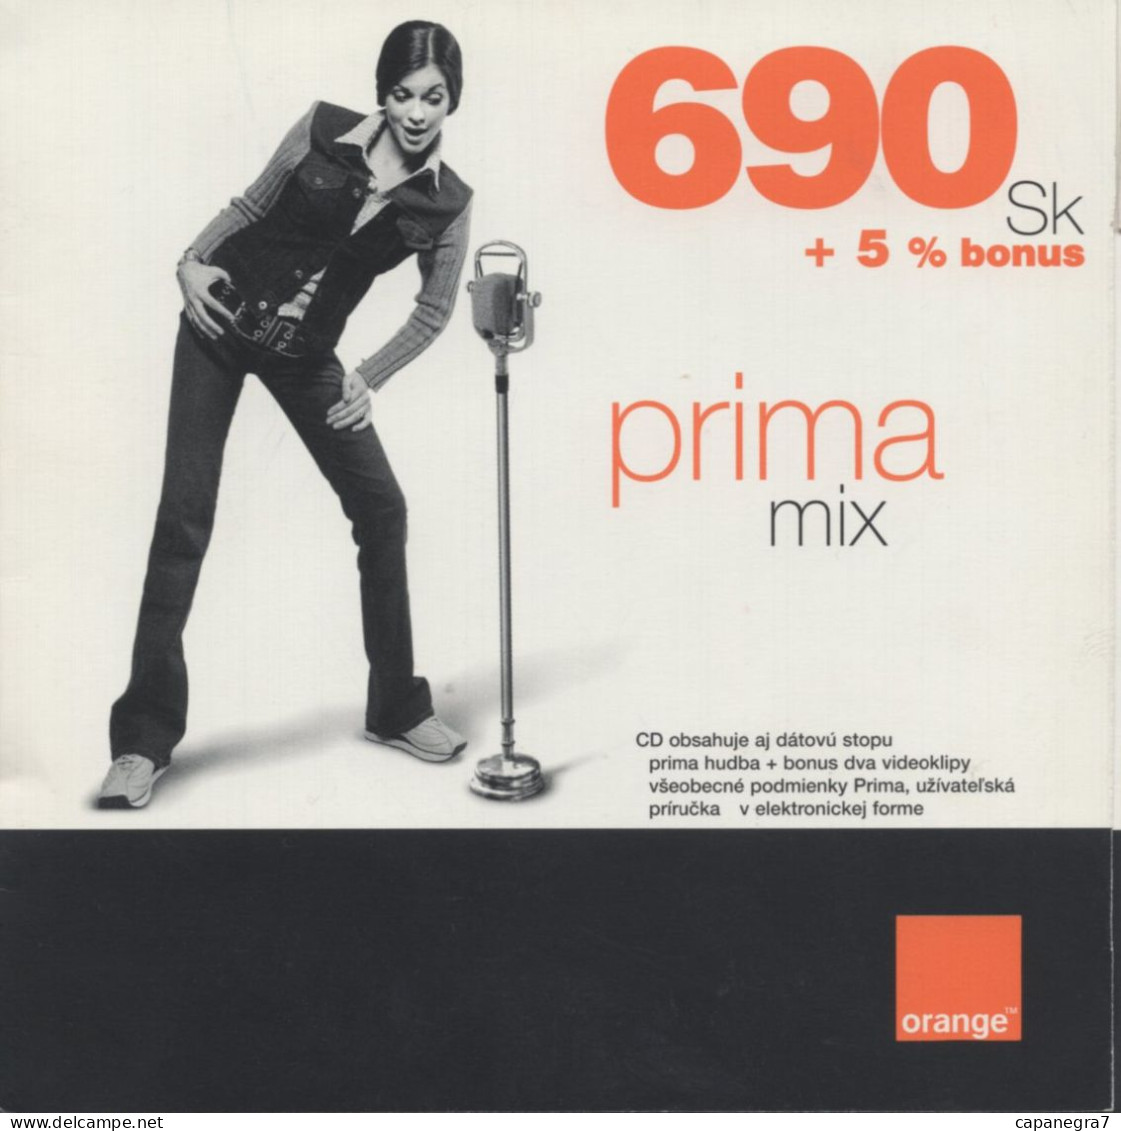 Prima Selection, Prima Mix 690 Sk, Polycarbonate Plastic CD, GSM Refill, Orange Slovakia, Validity 30.06.2004, Slovakia - Slovaquie